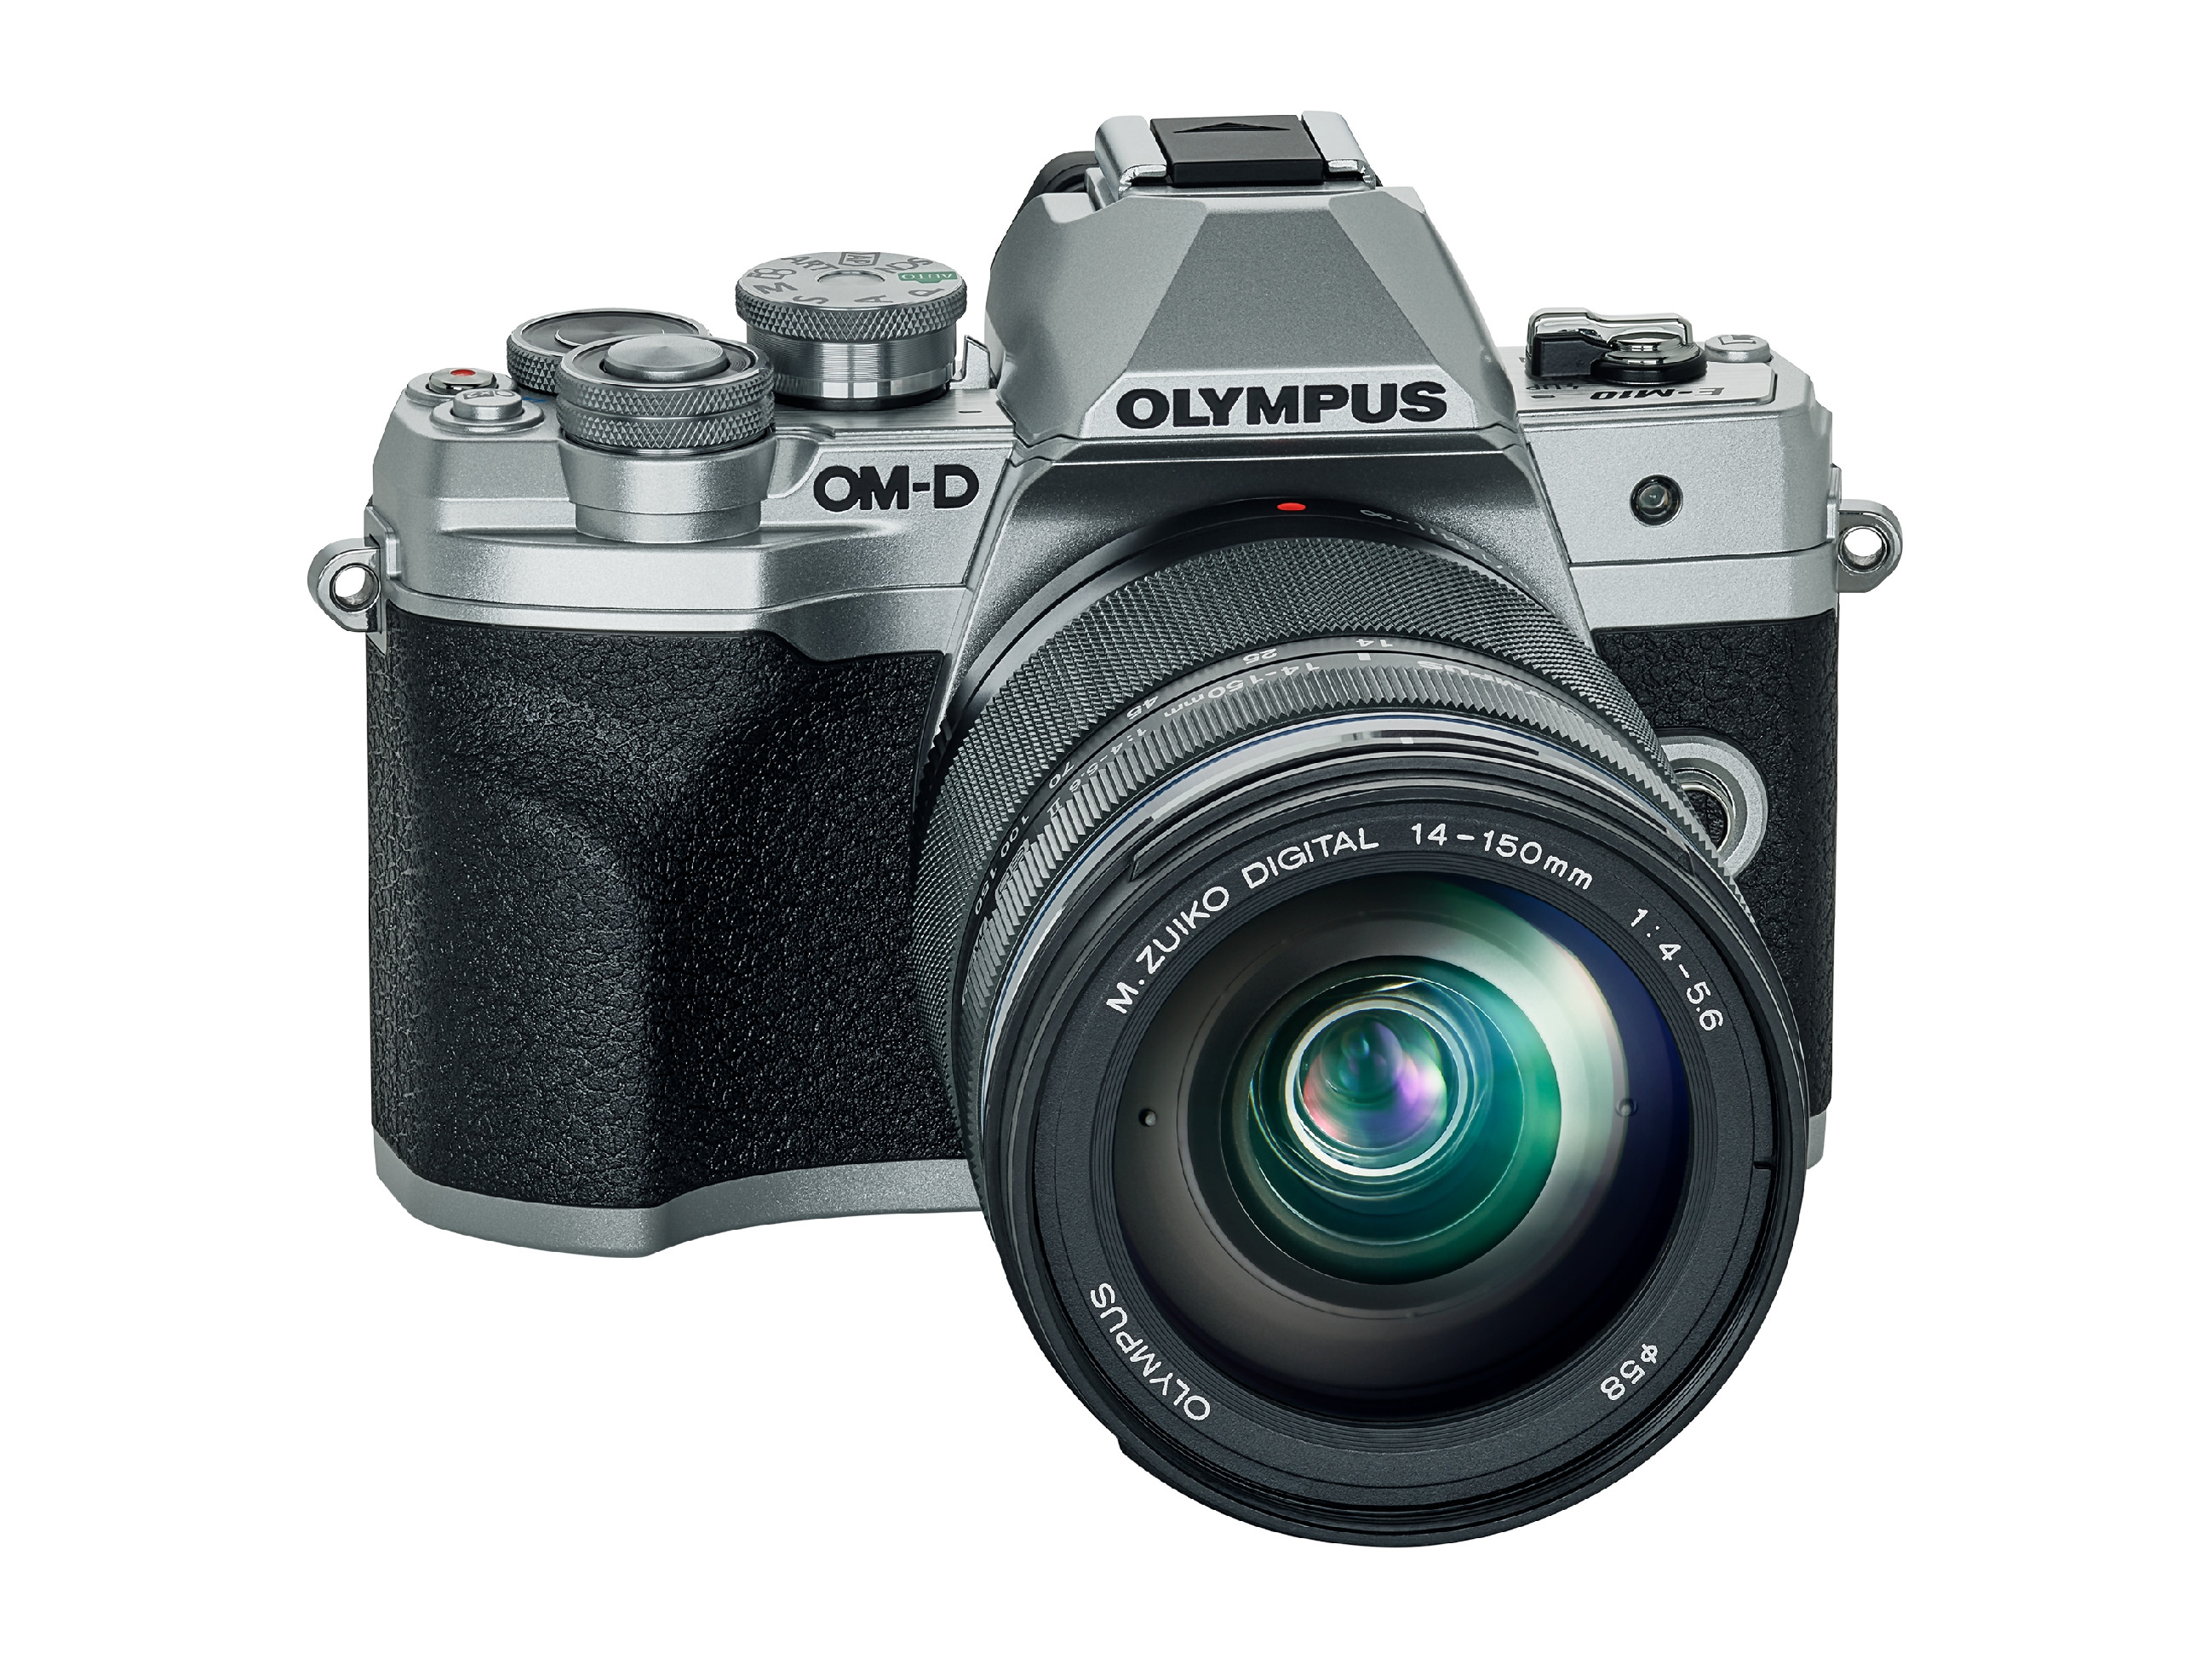 Digitálny fotoaparát Olympus E-M10 Mark IV 1415-2 kit silver/black